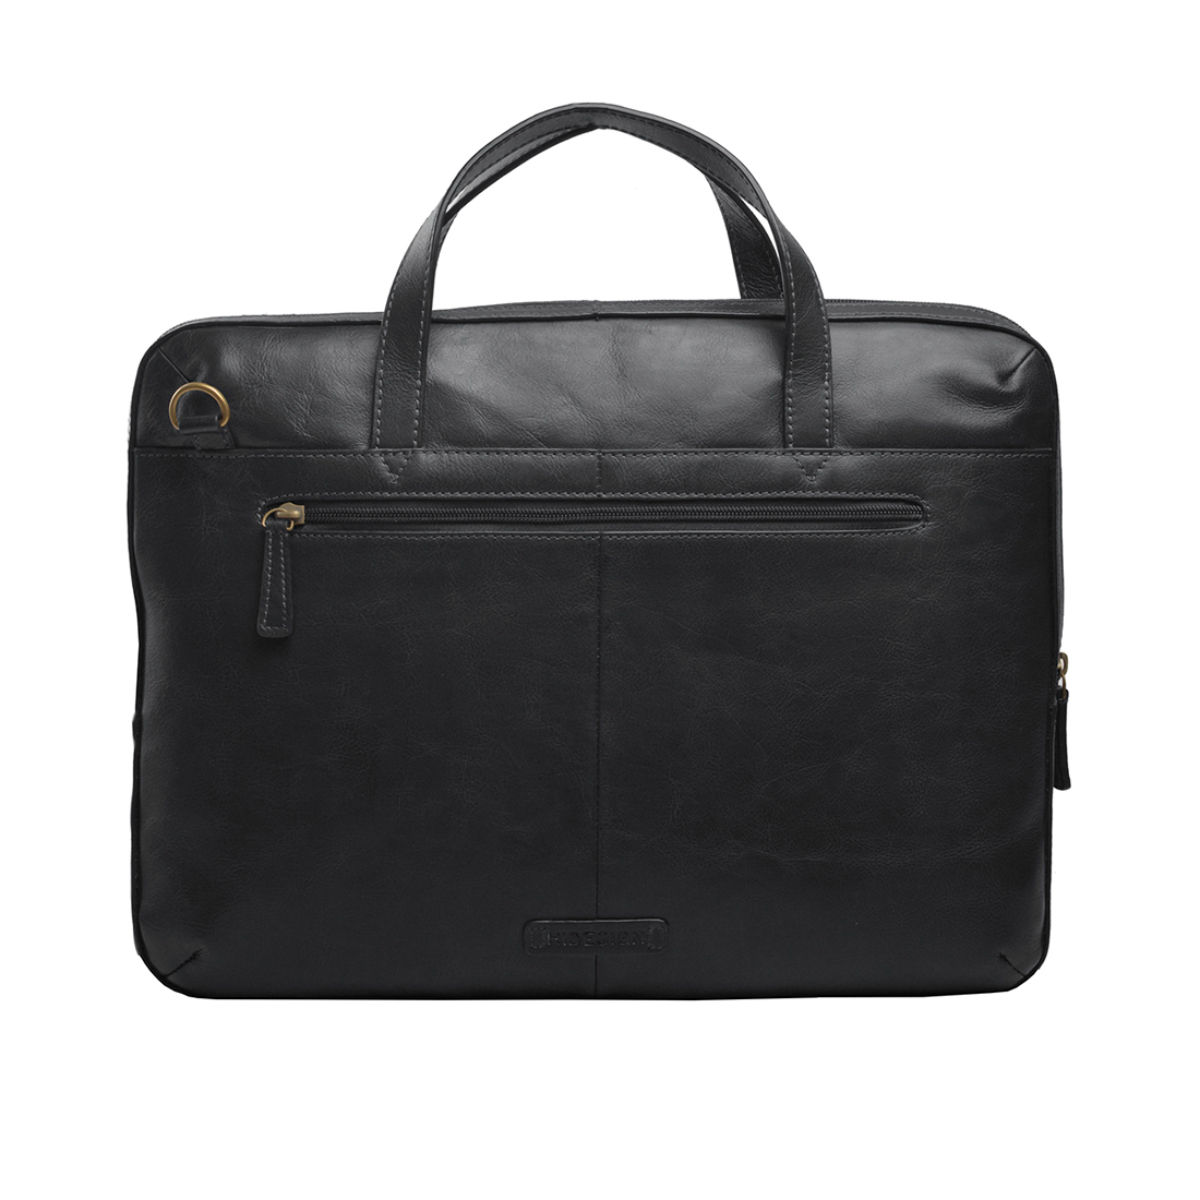 Hidesign Black Leather Shoulder/Laptop Bag 18" x 12" x 3"  MC9 | eBay